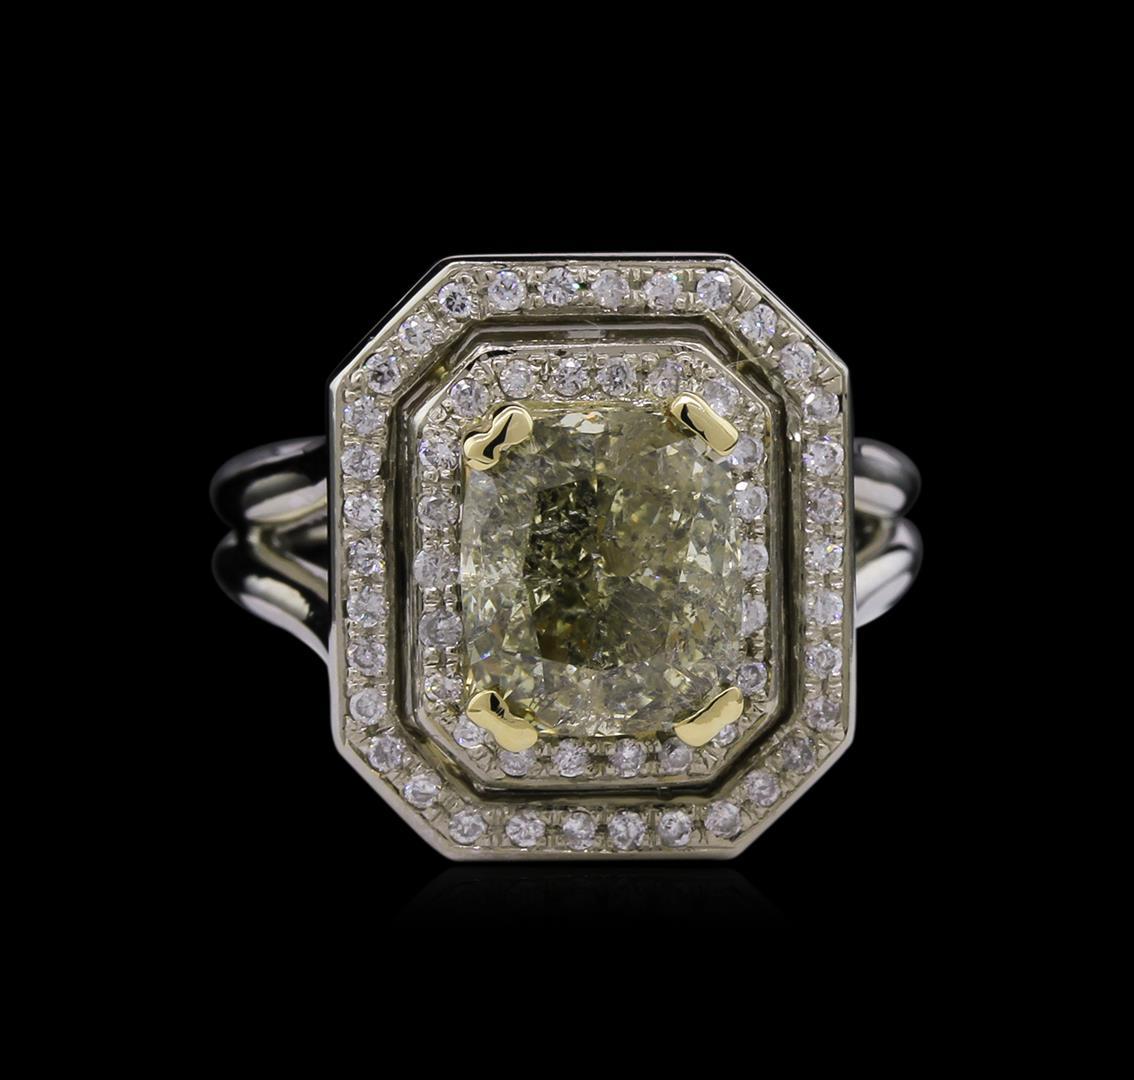 3.36 ctw Fancy Light Greenish Yellow Diamond Ring - 14KT Two-Tone Gold